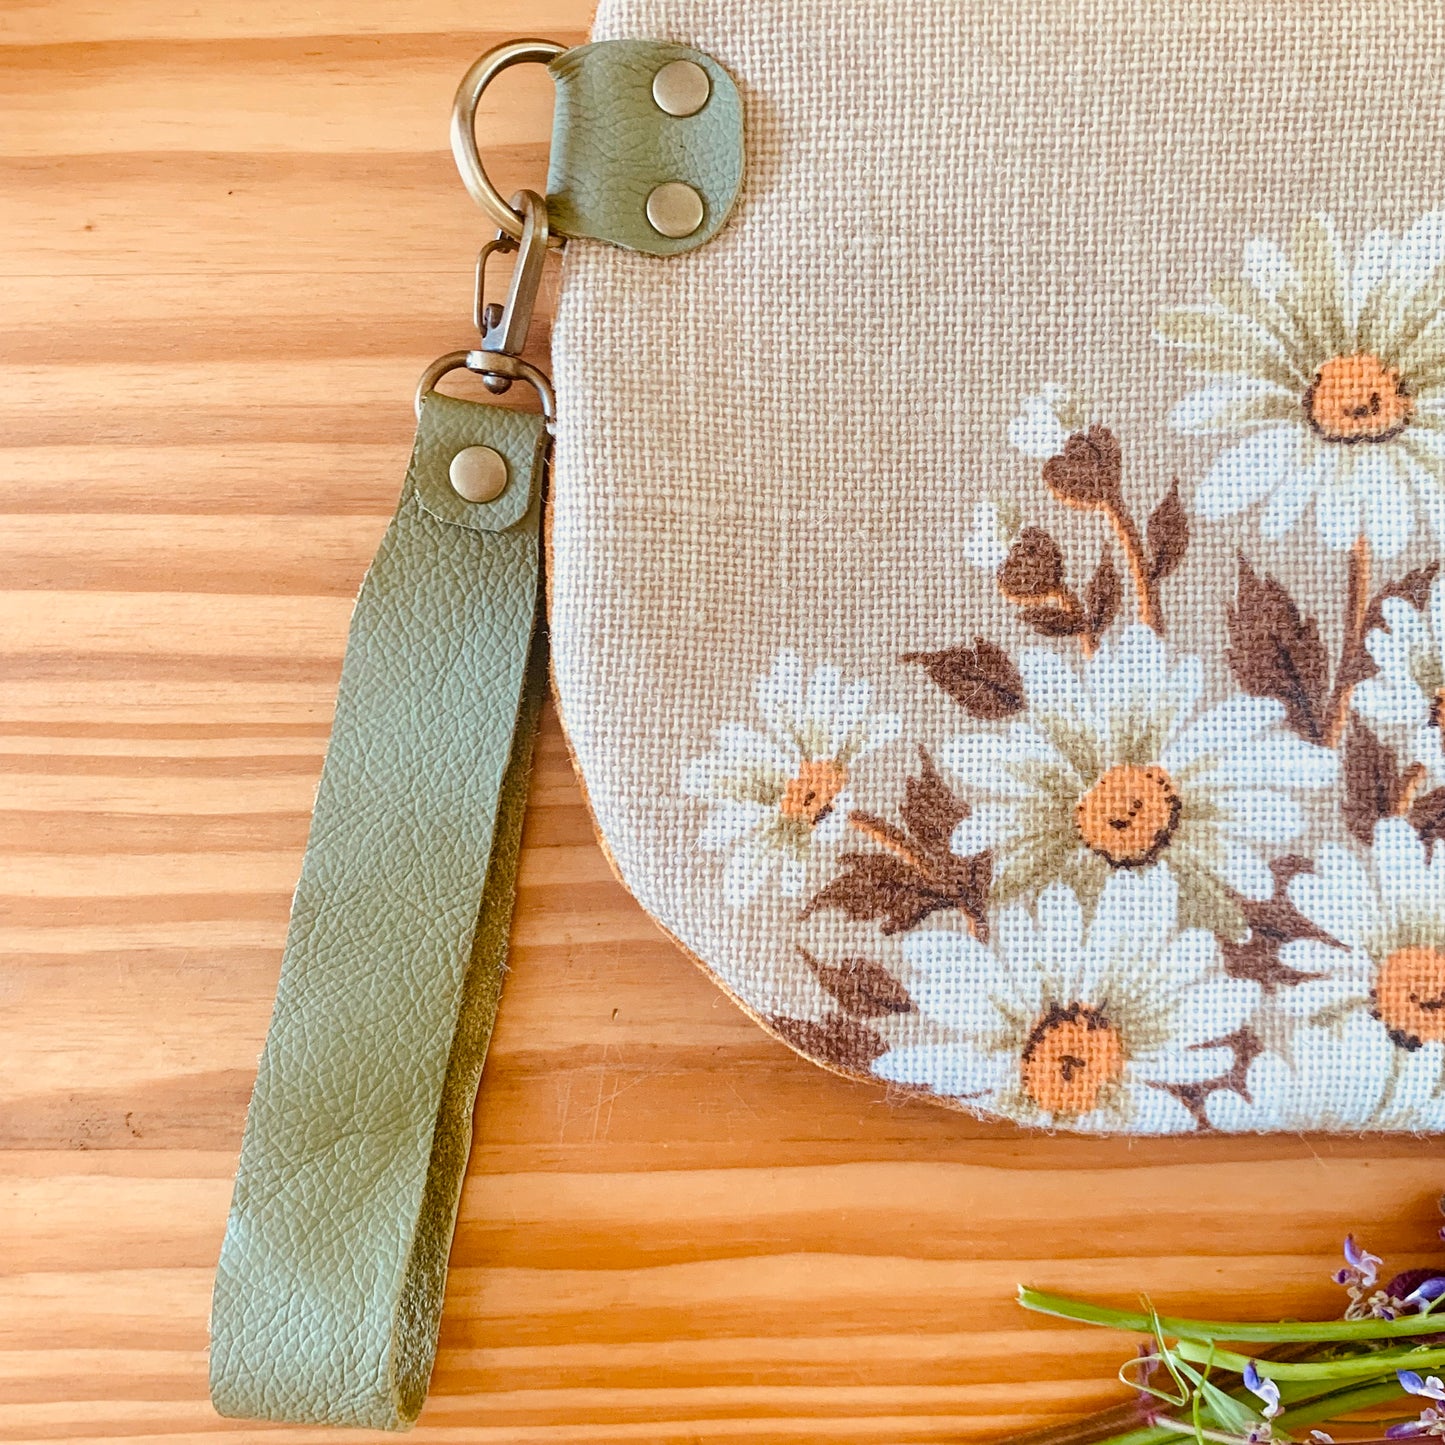 Vintage daisy clutch purse